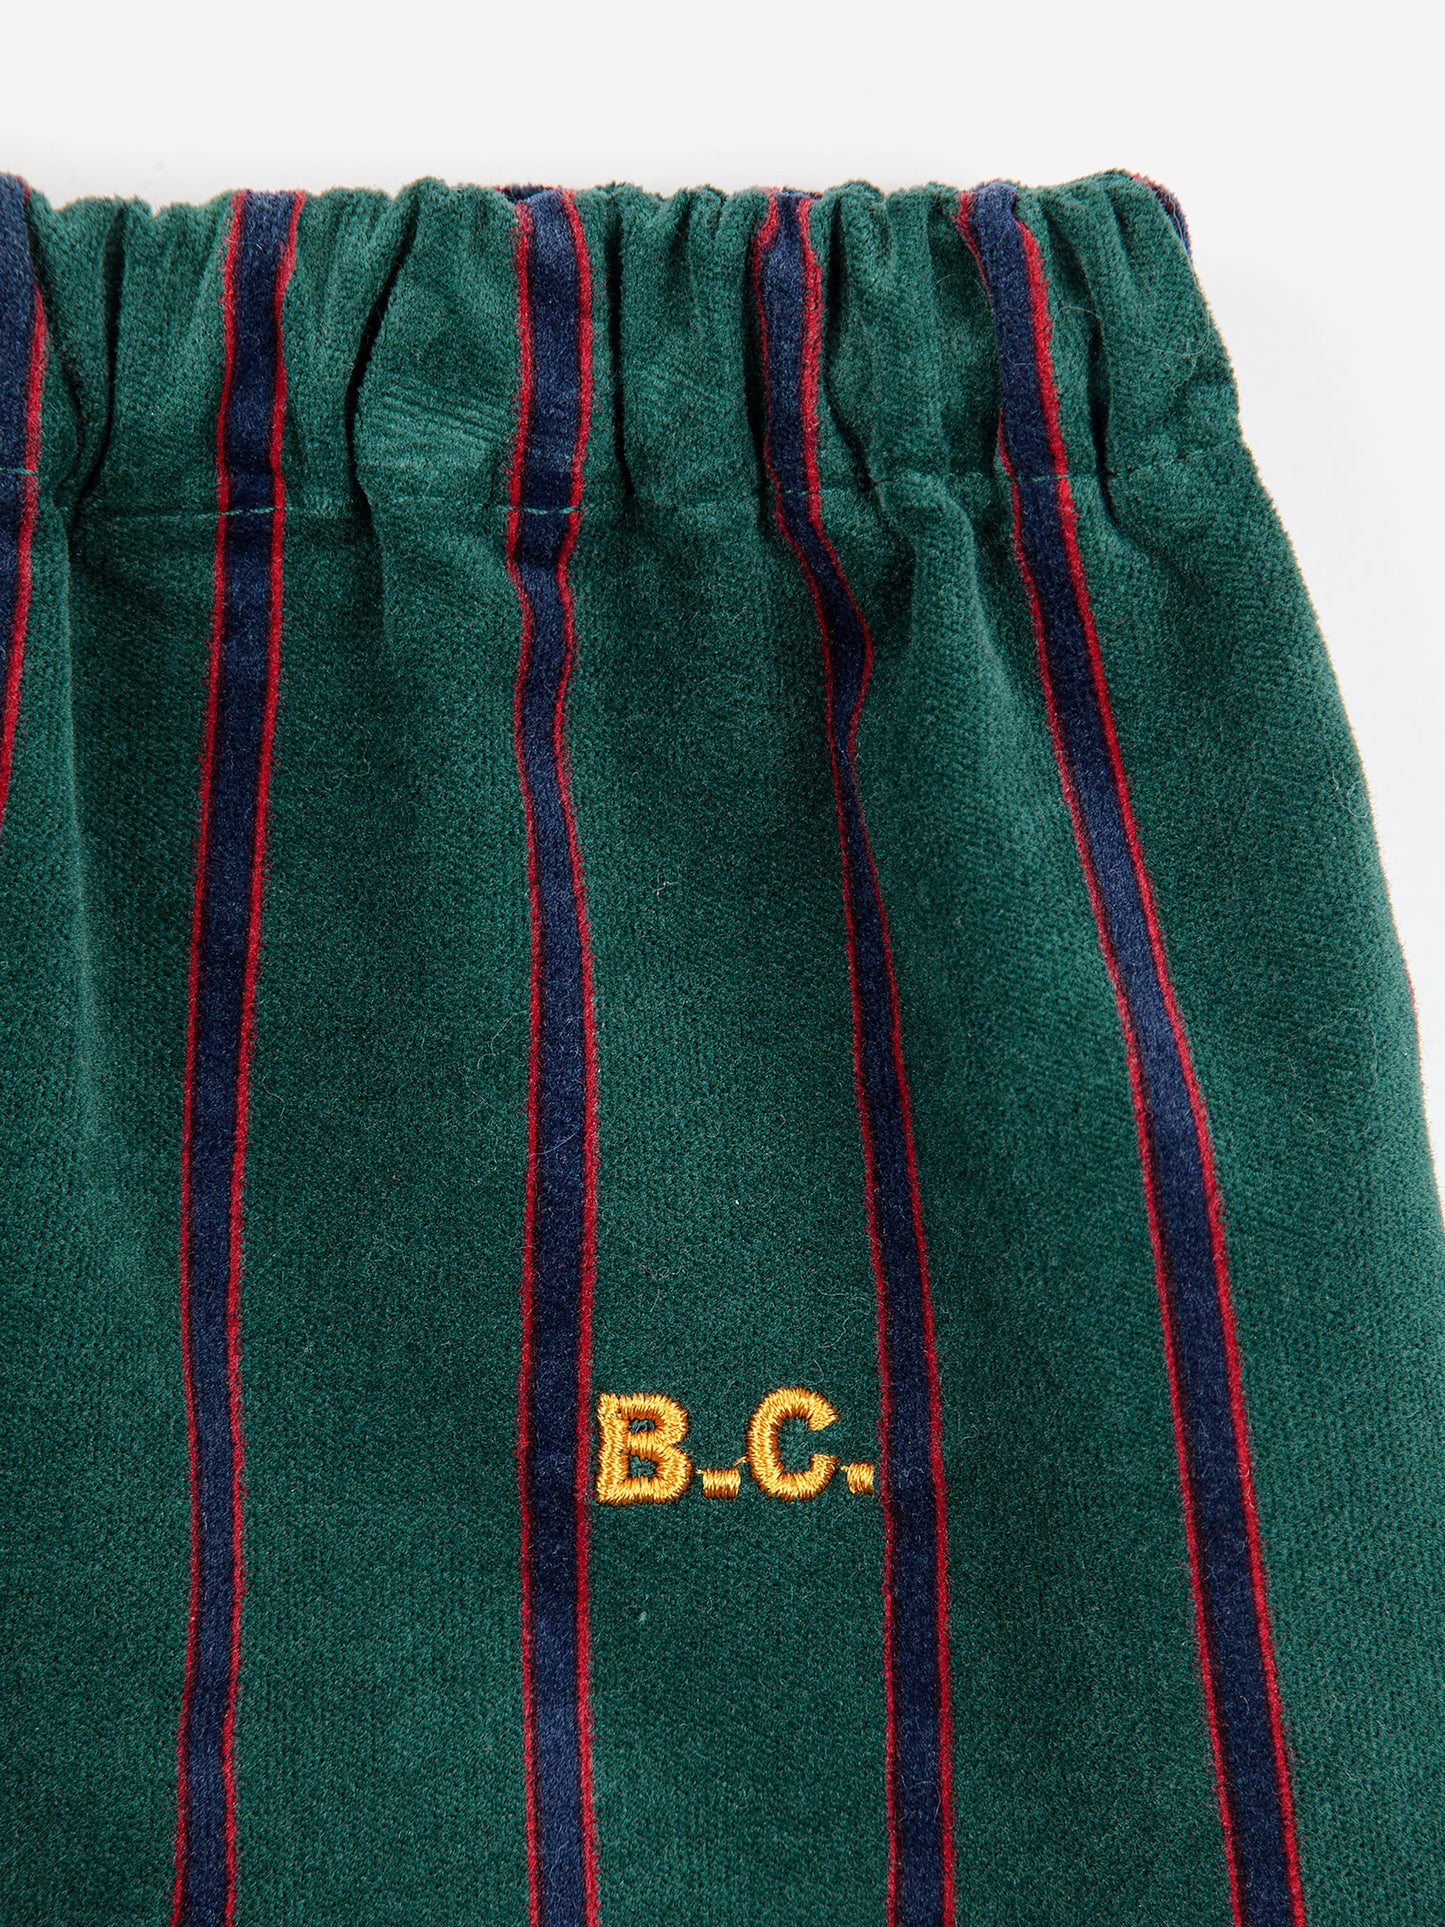 B.C striped ruffle skirt